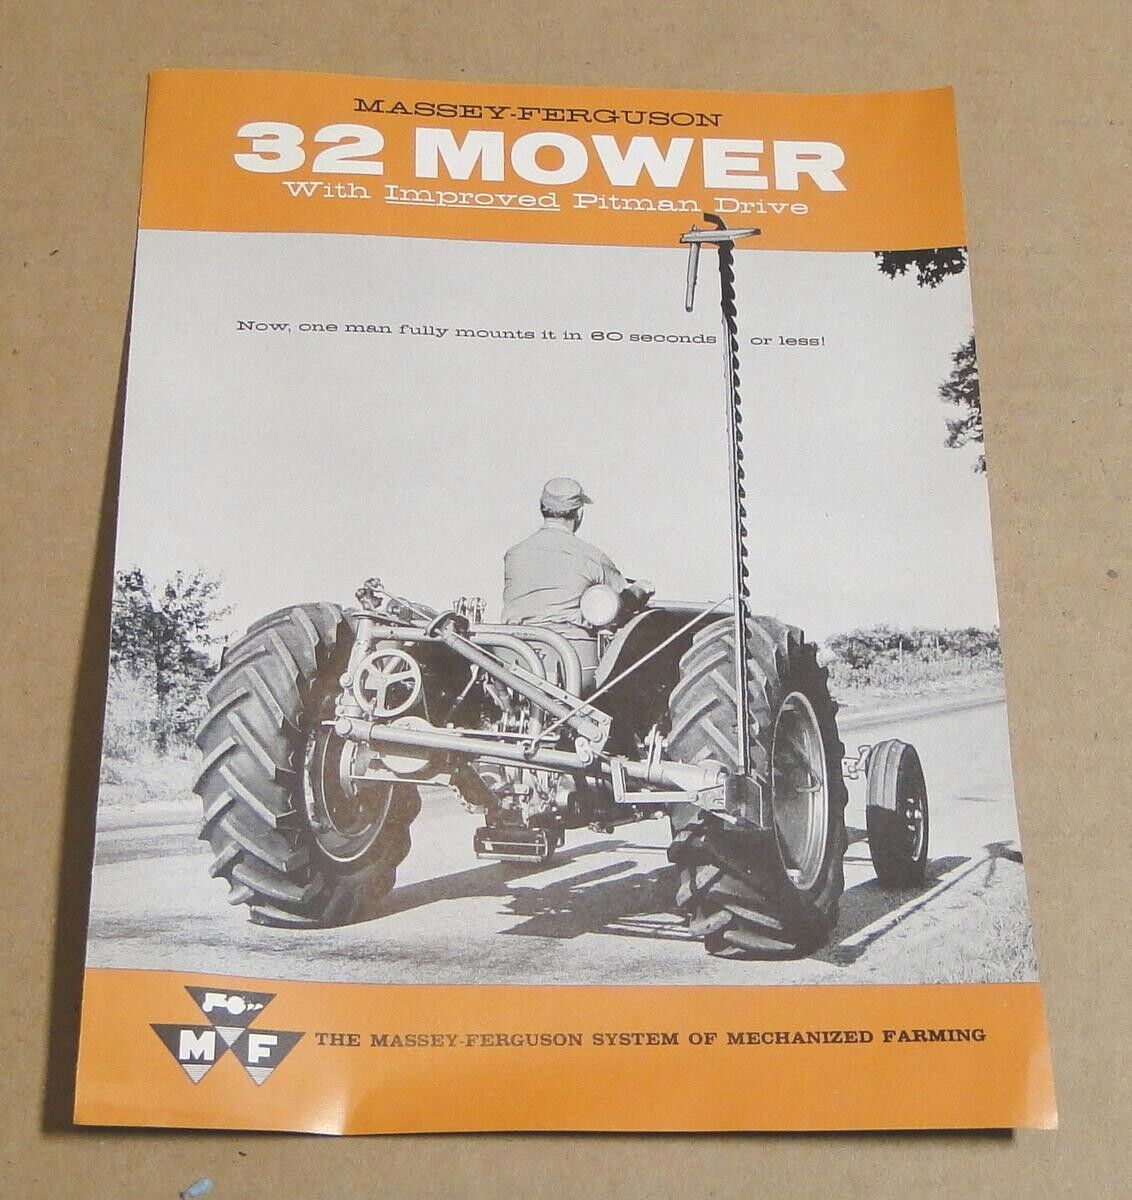 Original 1959 Massey-Ferguson 32 Mower Brochure